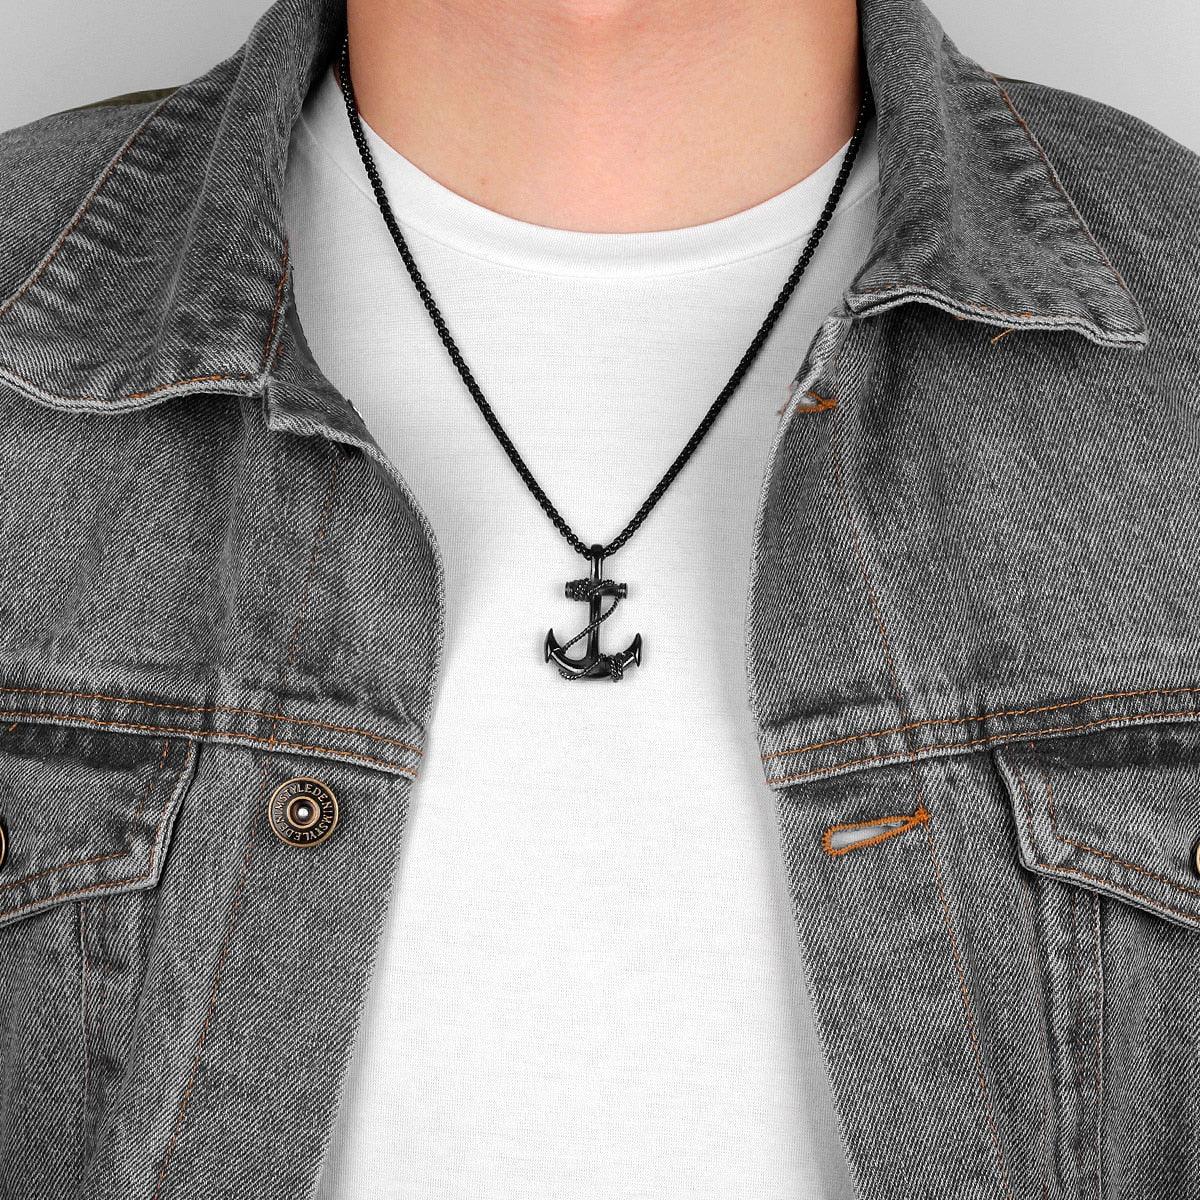 Colar Anchor - Alfa Wear - colar, colar de aço, colar de metal, colar masculino